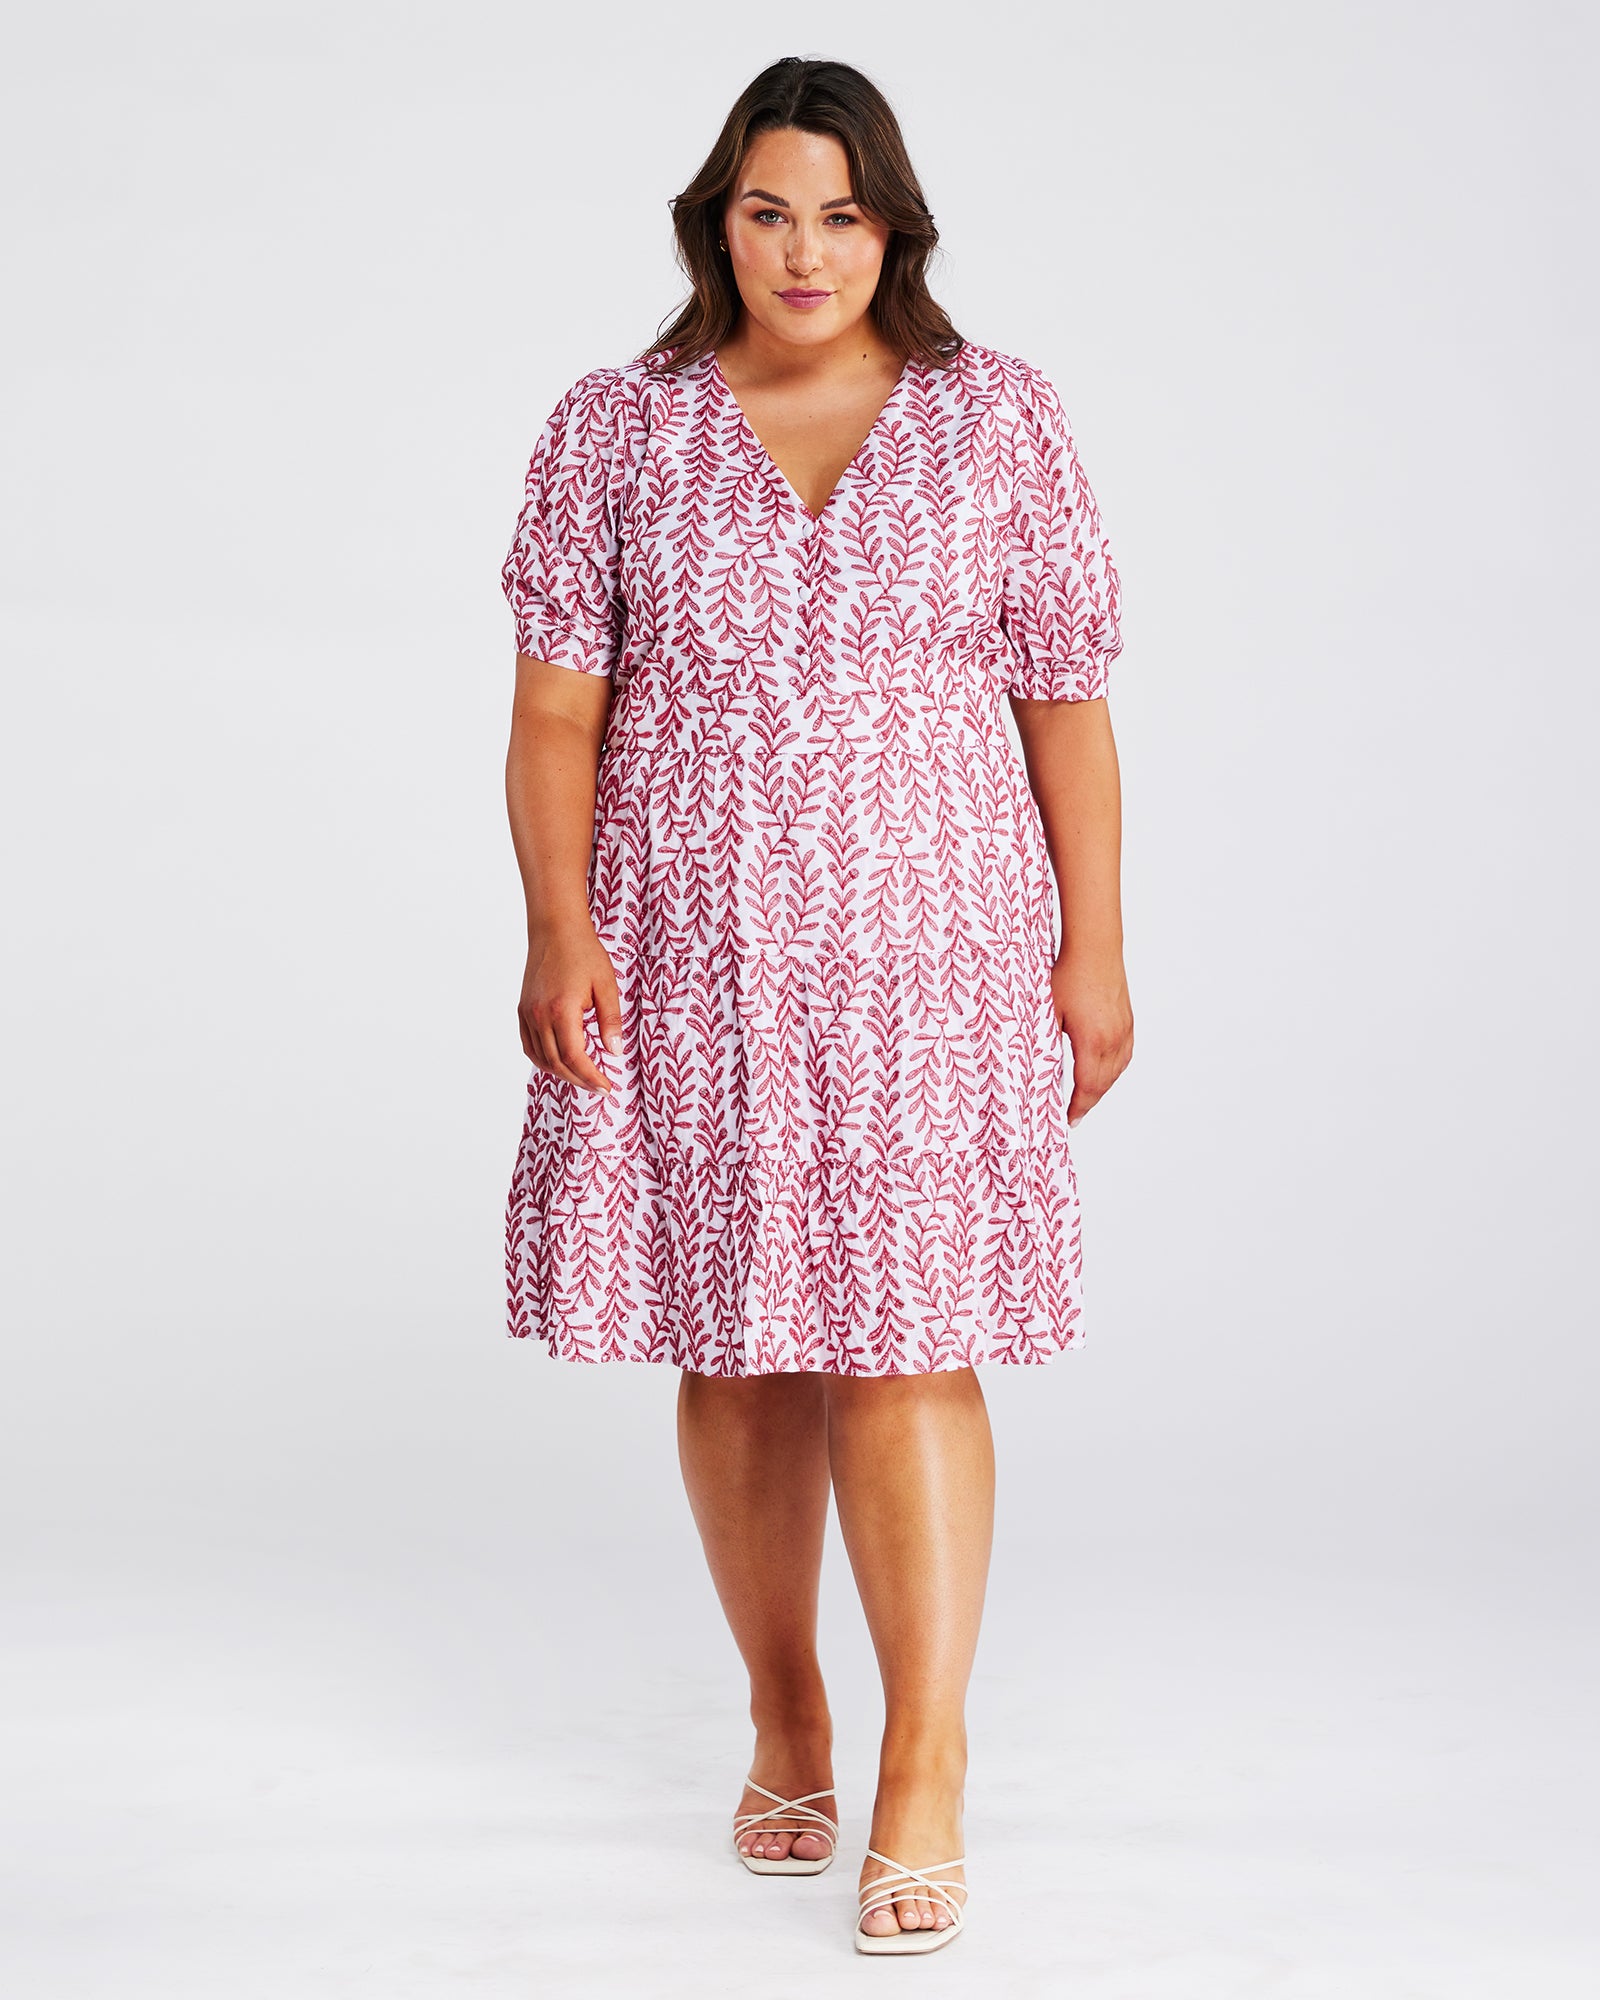 A plus size woman wearing the Estelle La Croisette Dress, a pink and white floral print dress.